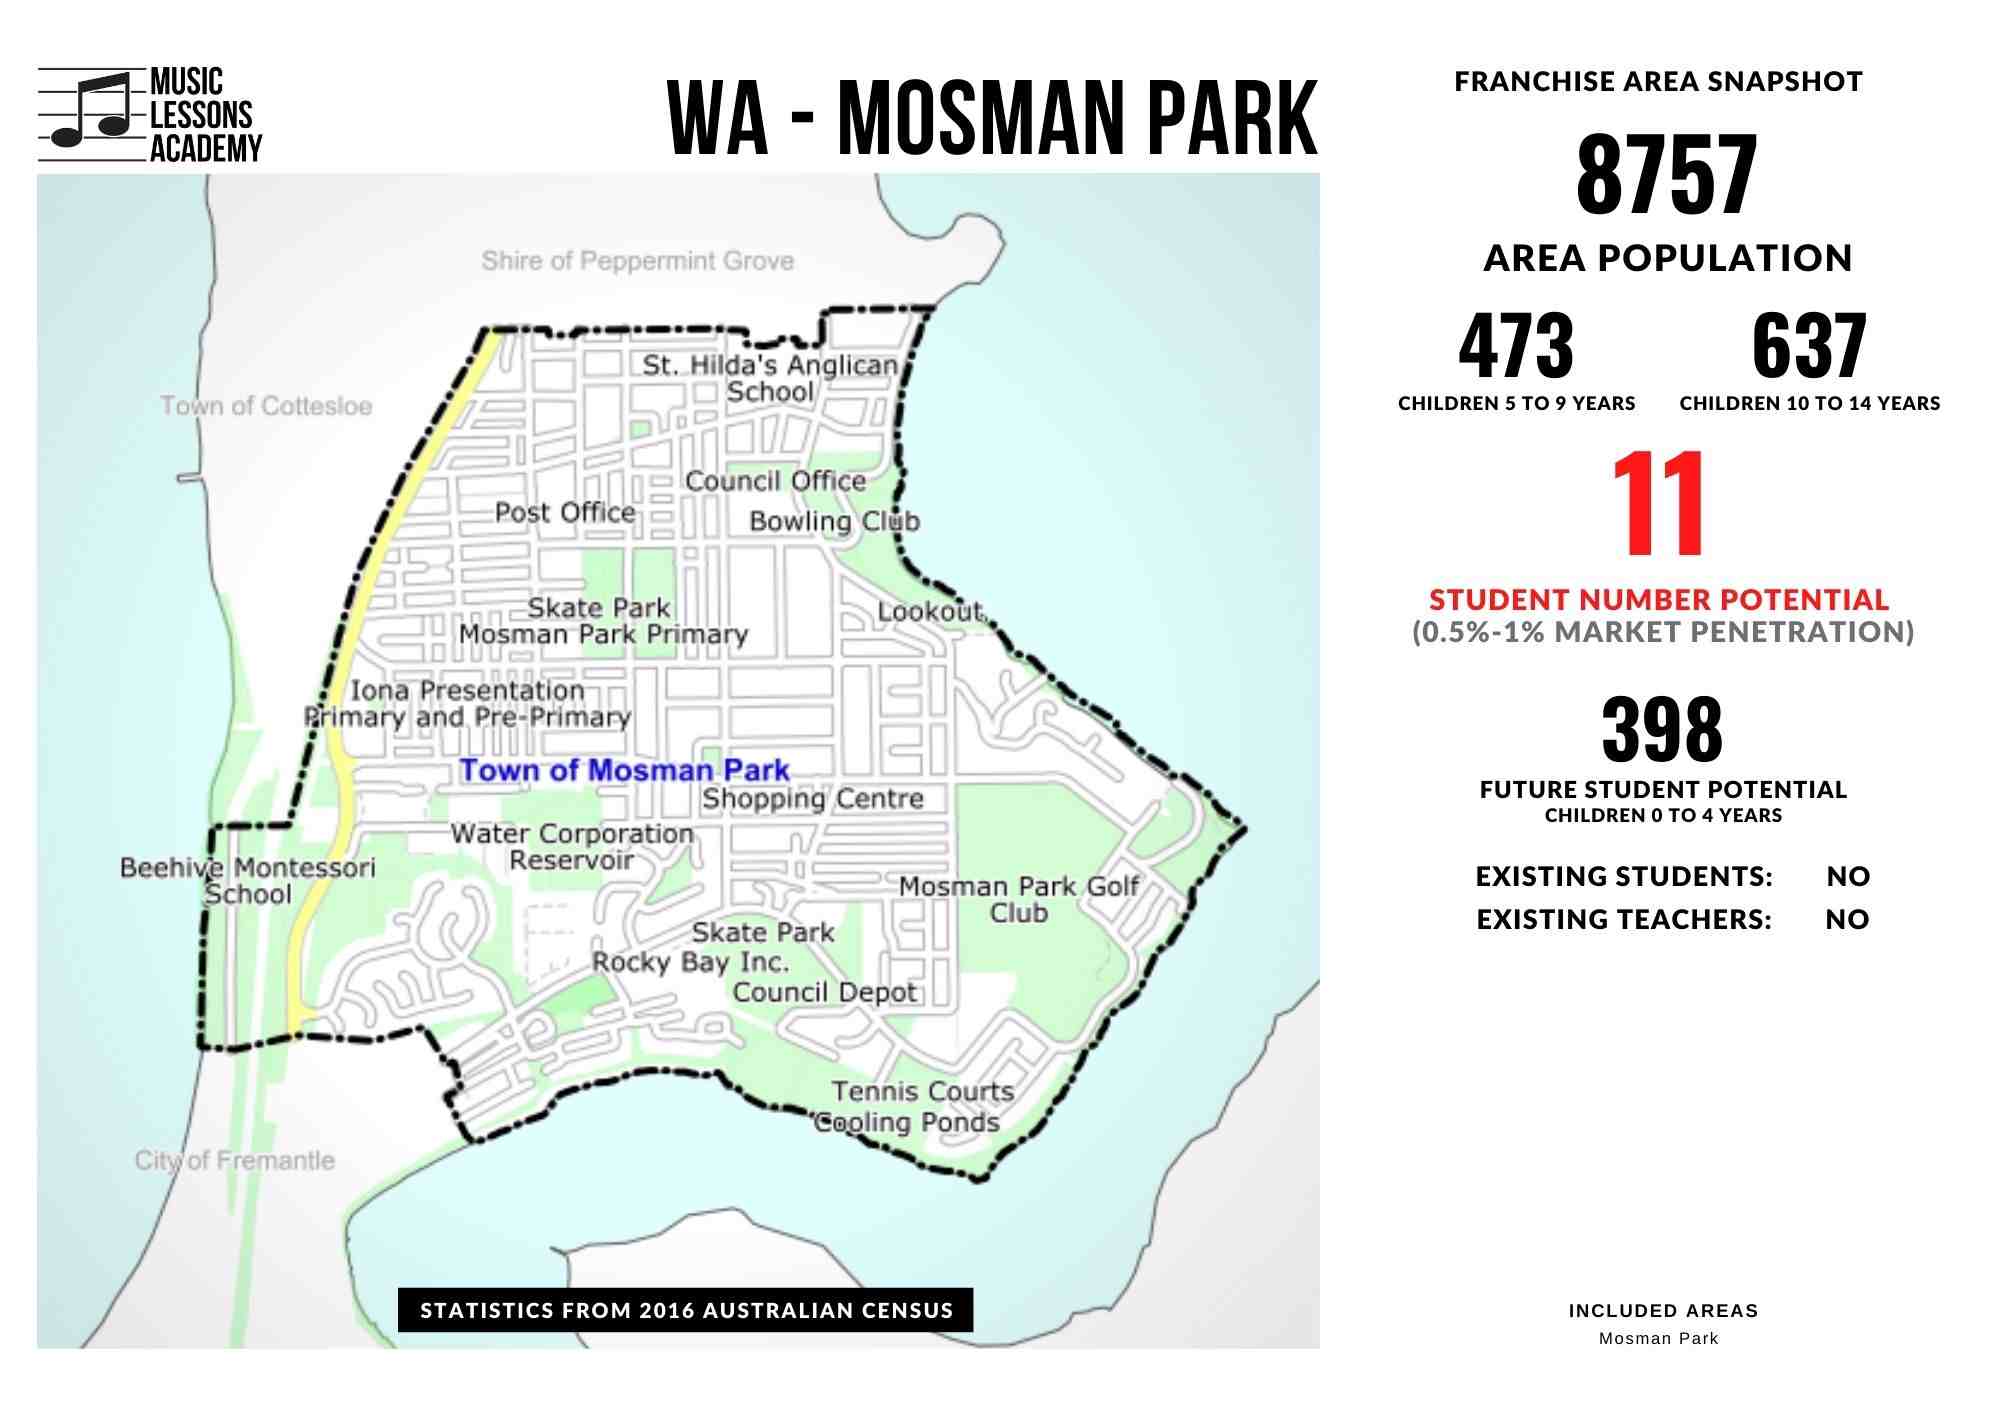 WA Mosman Park Franchise for sale